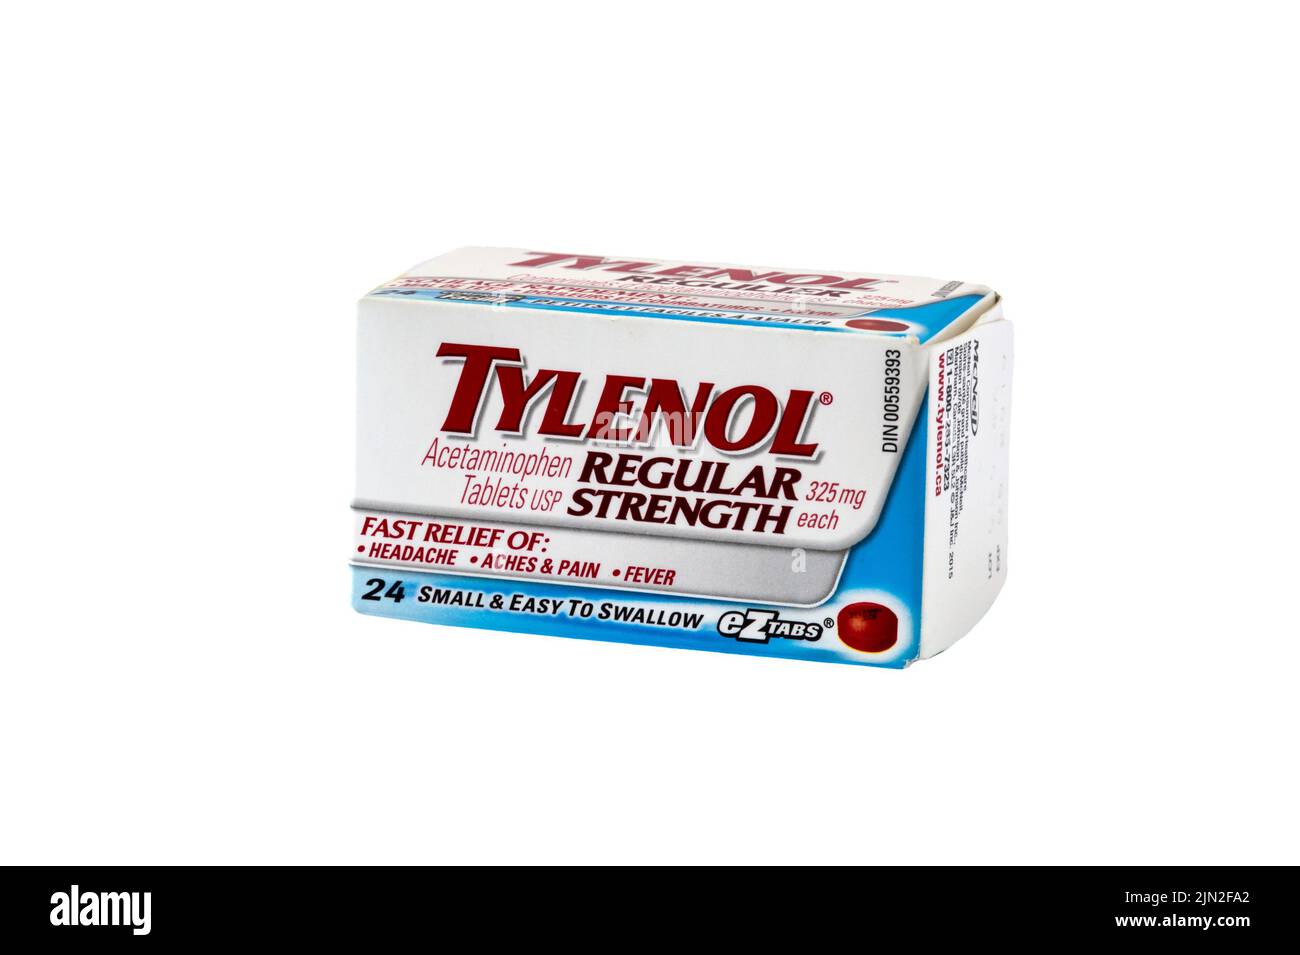 A box of Tylenol regular strength Acetaminophen tablets. Stock Photo